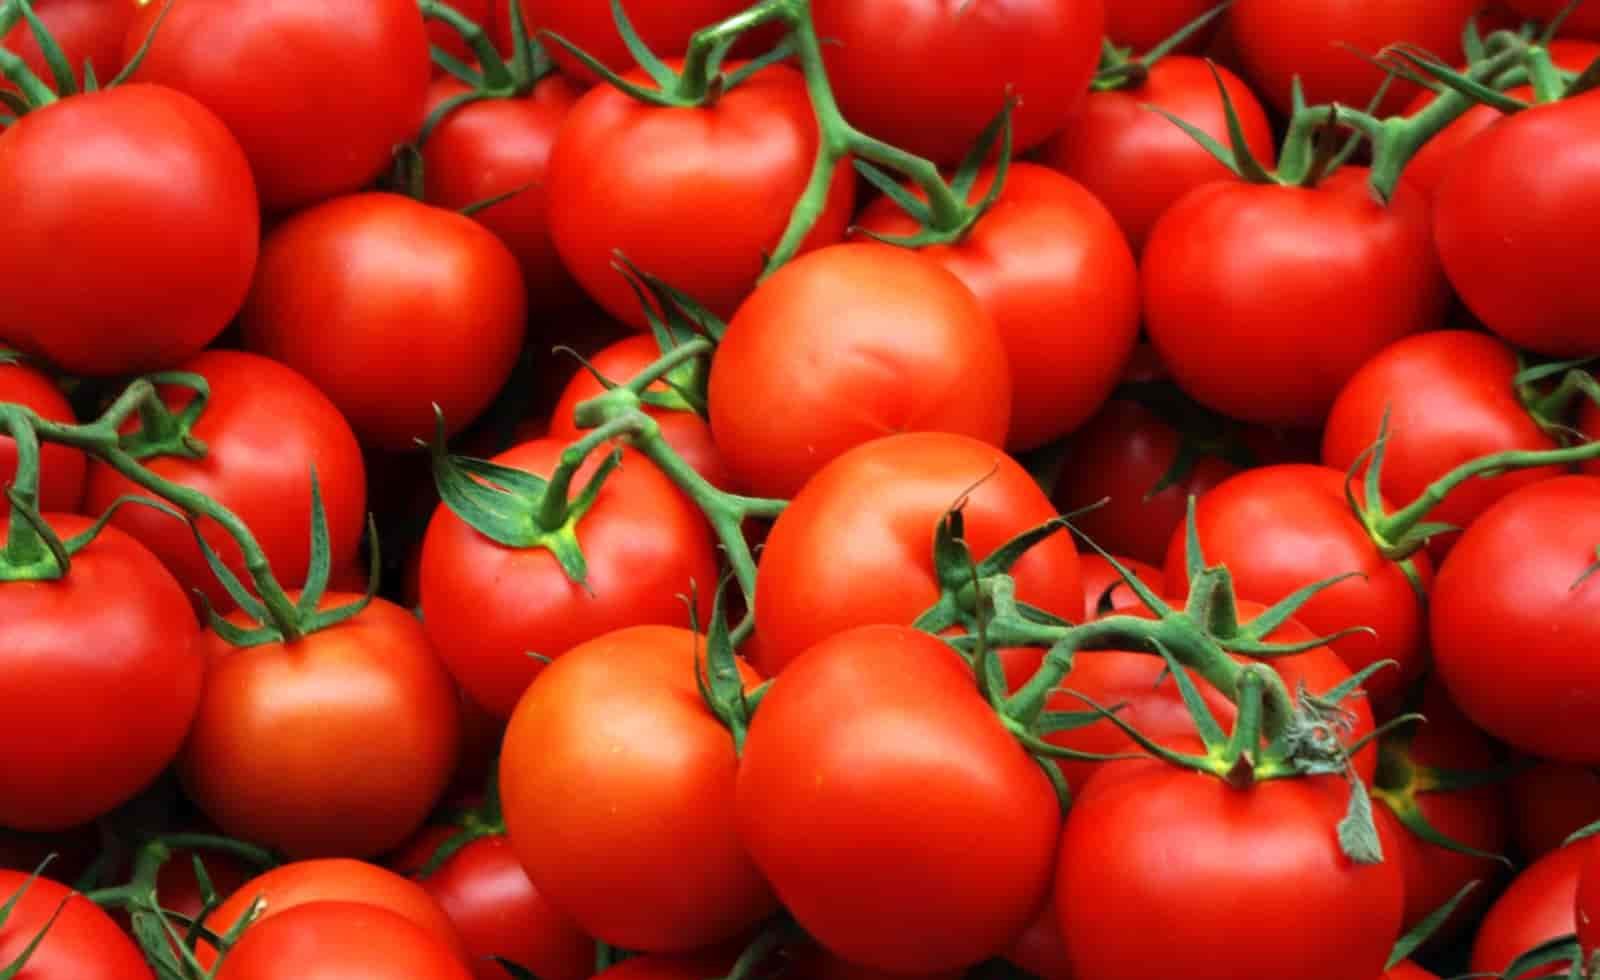 Tomato manufacturer